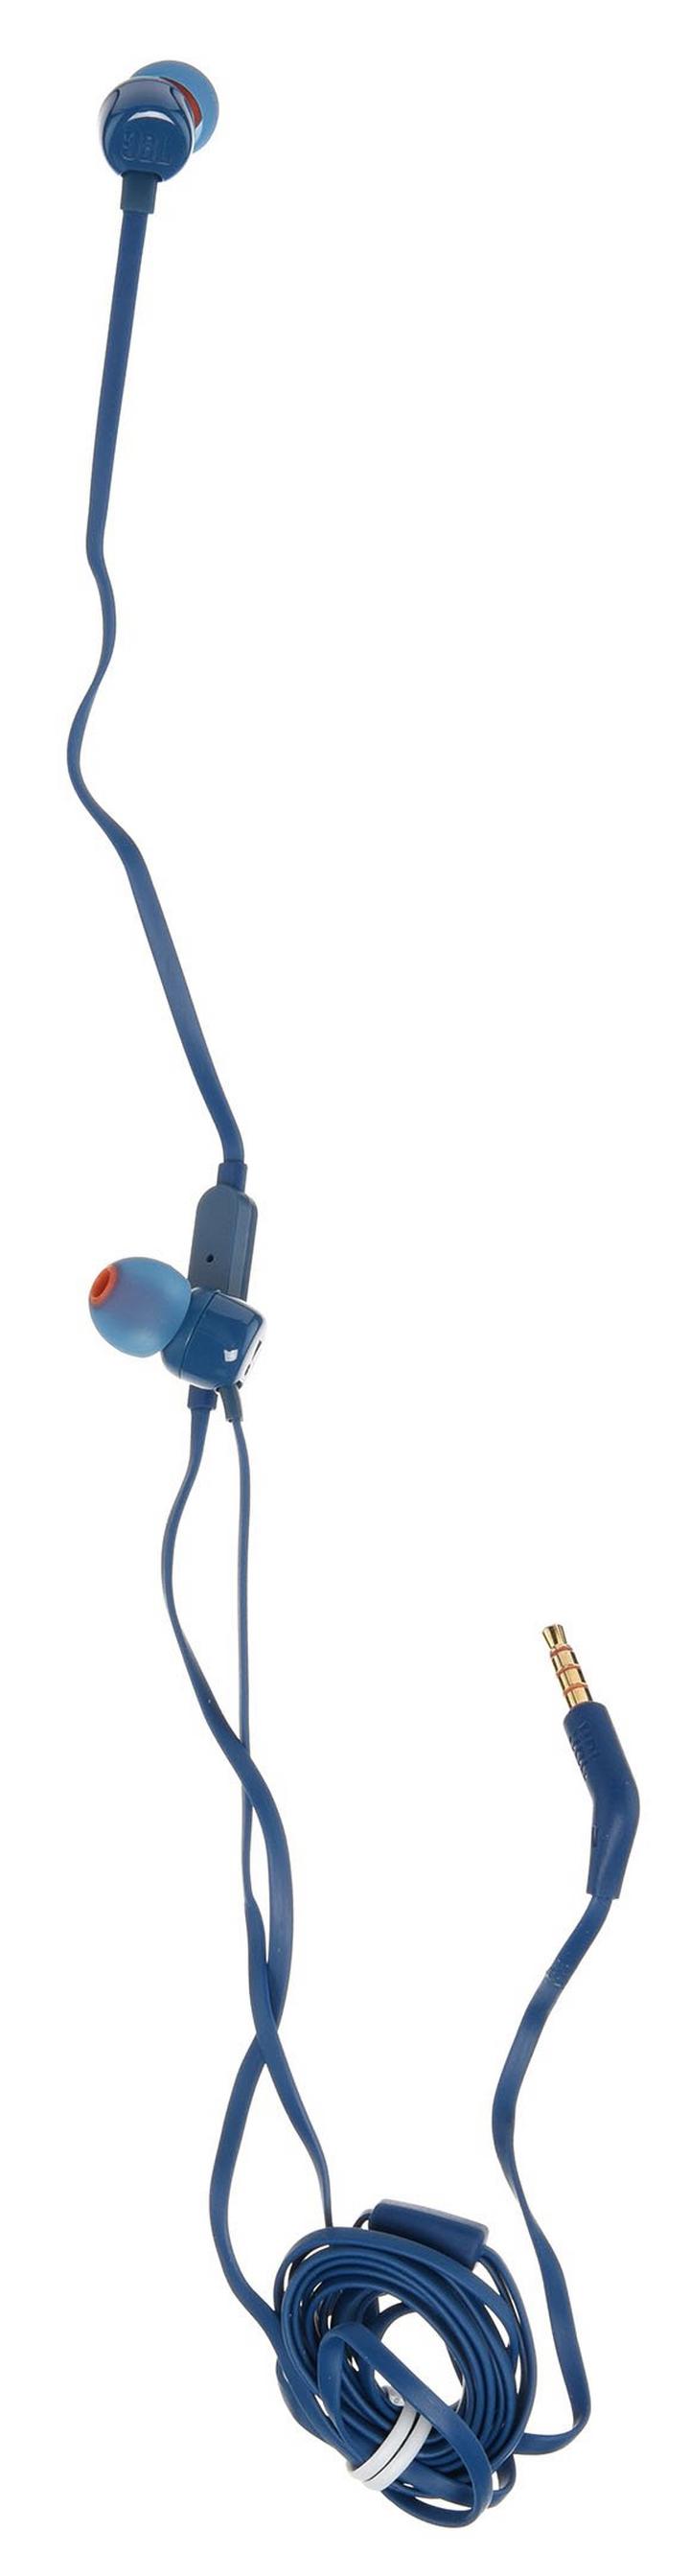 JBL T110 In-Ear Headphones (Blue) JBLT110BLUAM B&H Photo Video